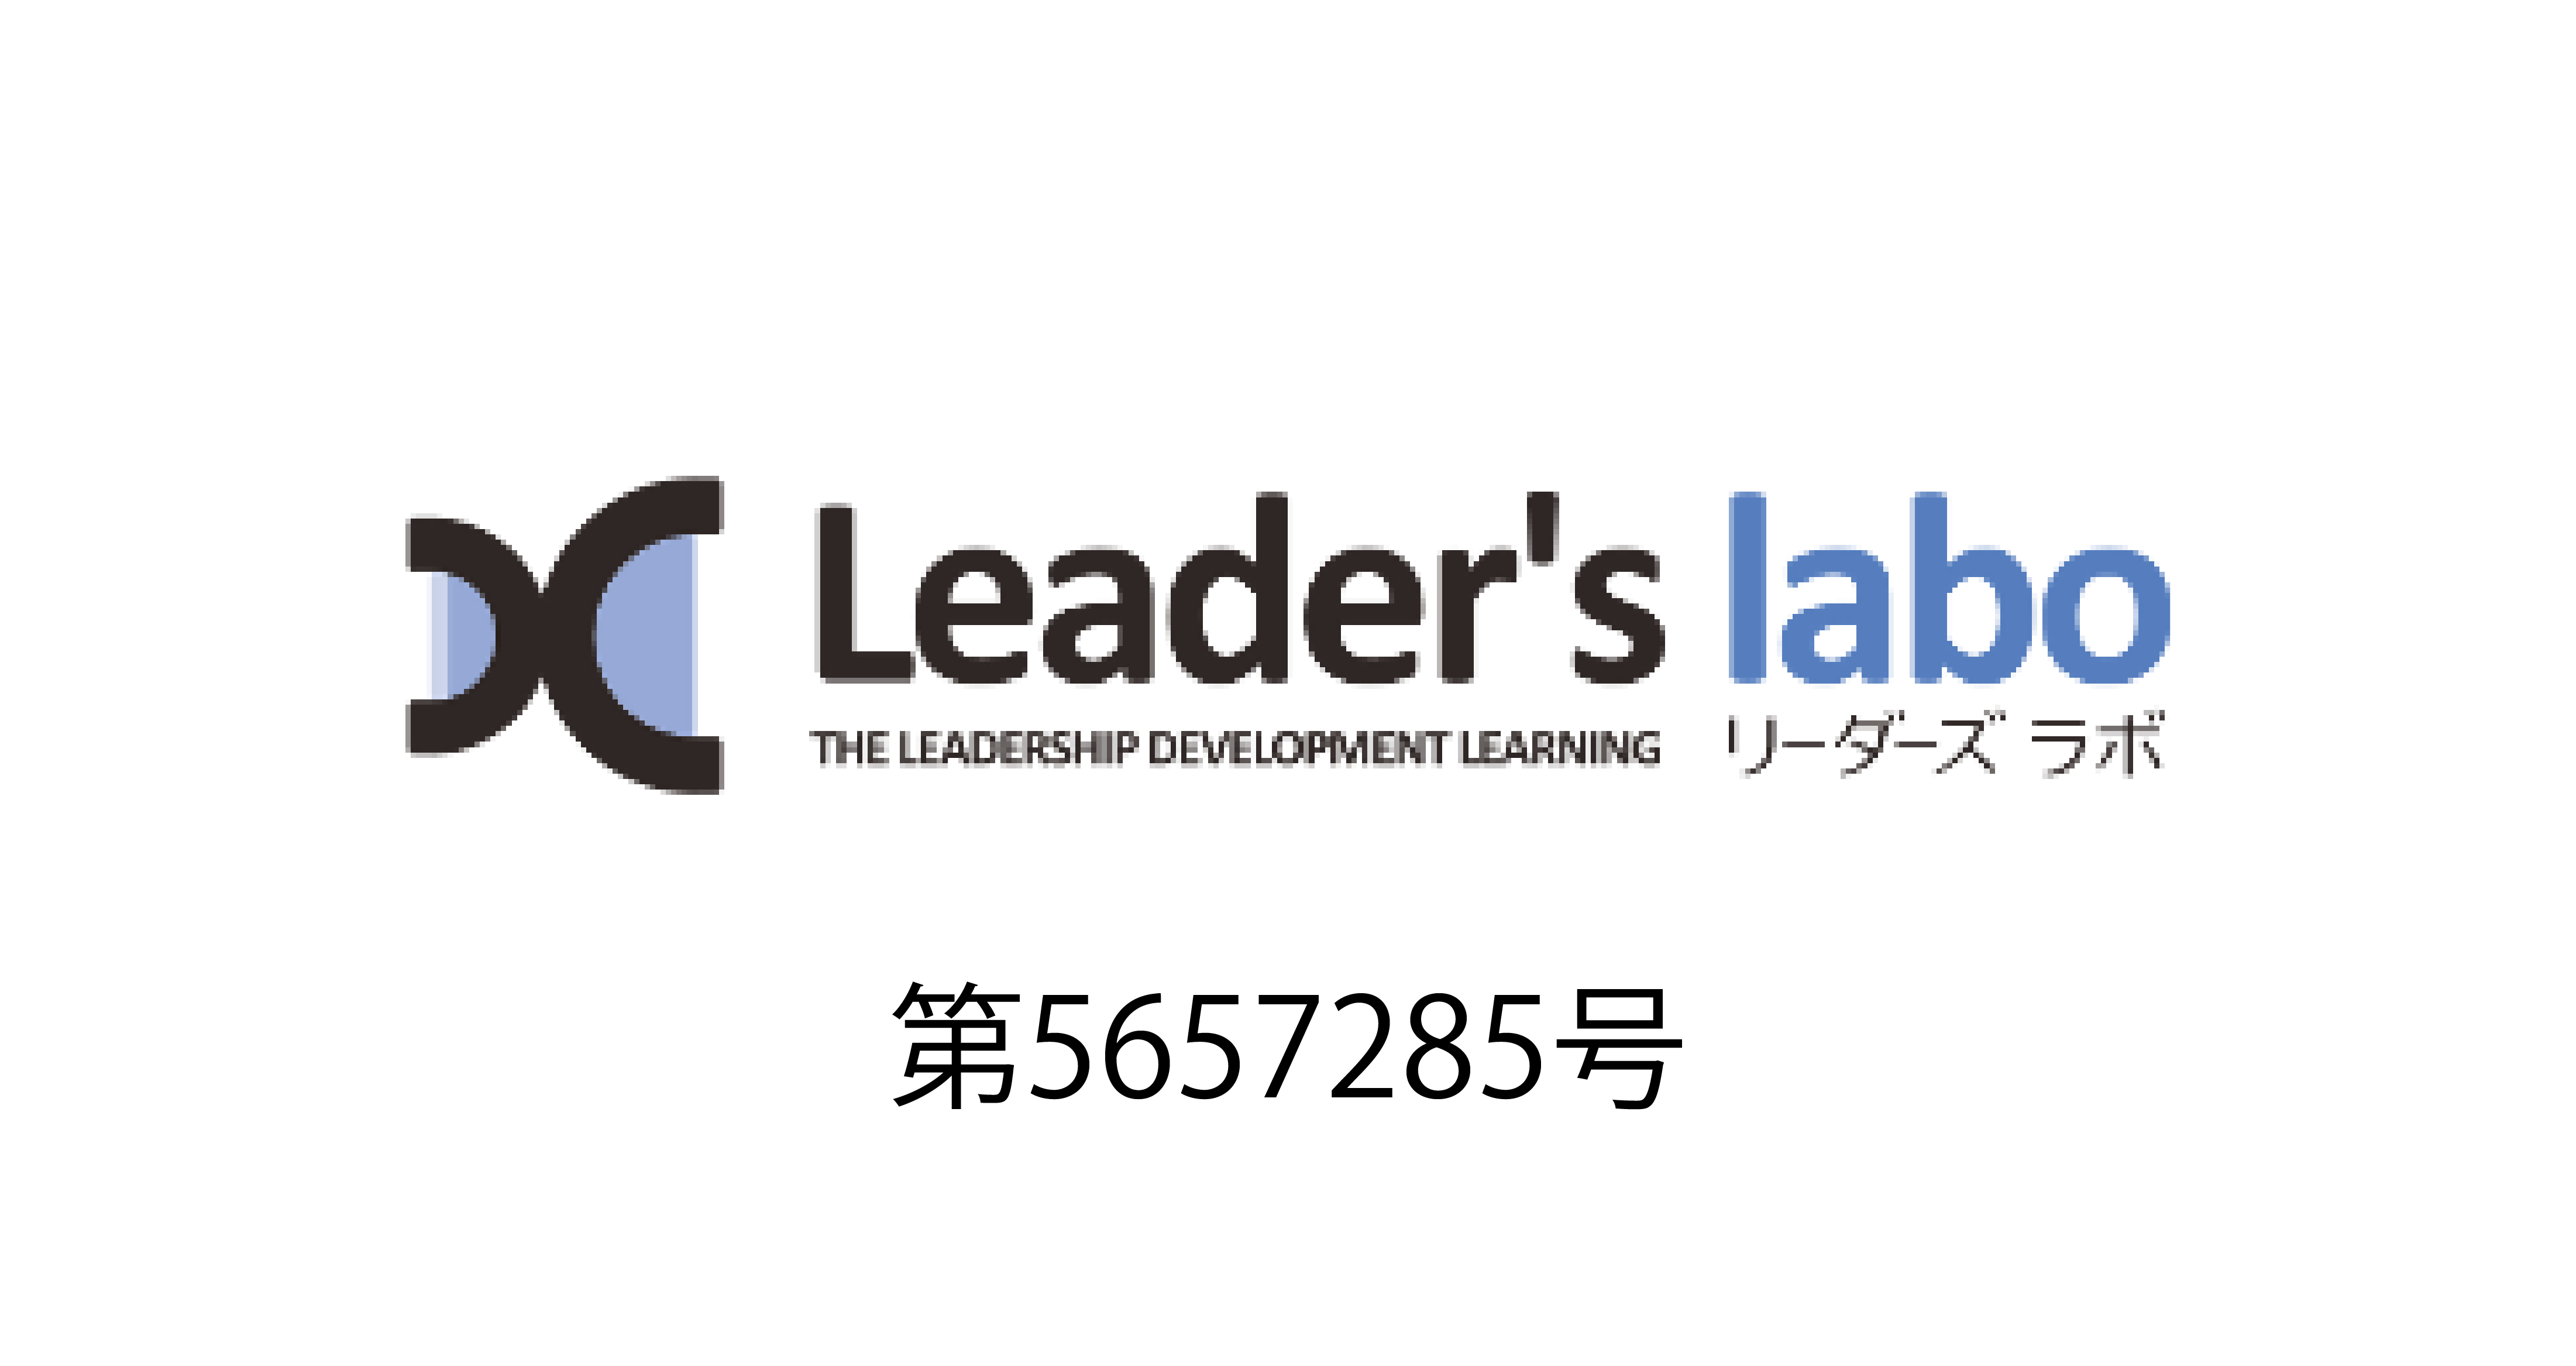 leader-logo